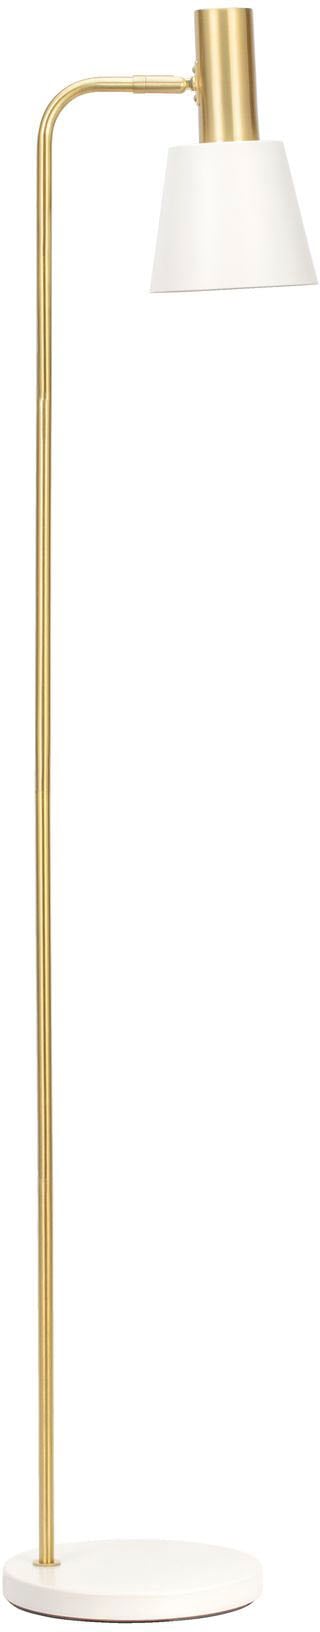 Pauleen Stehlampe »Grand 1 BAUR Weiß, Metall kaufen Gold, günstig | flammig-flammig, Elegance«